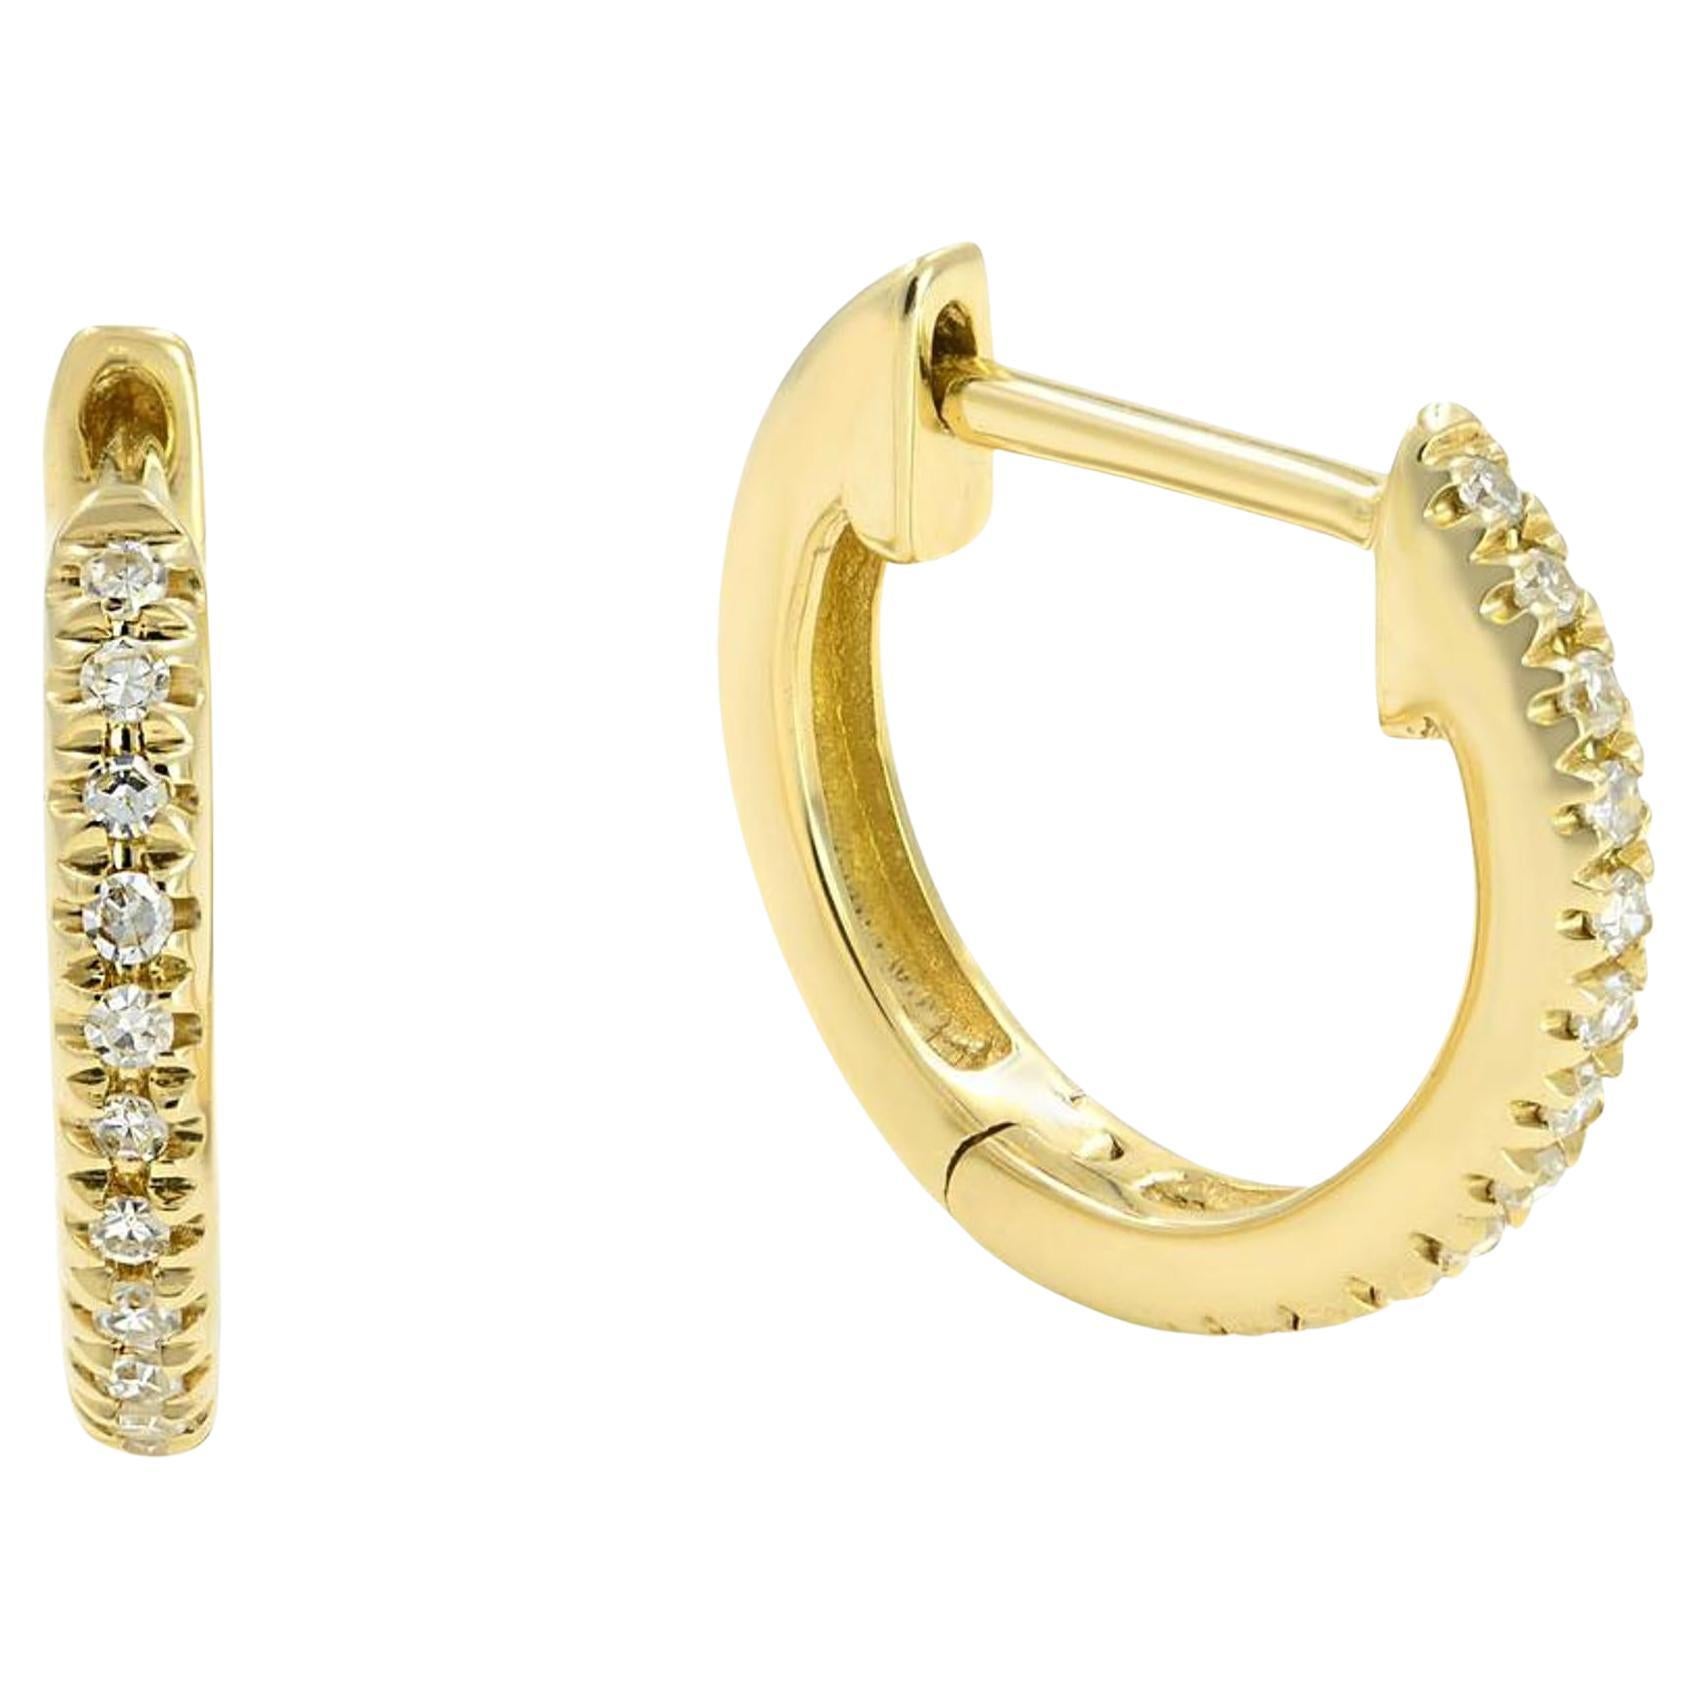 Rachel Koen Pave Diamond Huggie Earrings 14K Yellow Gold 0.08Cttw